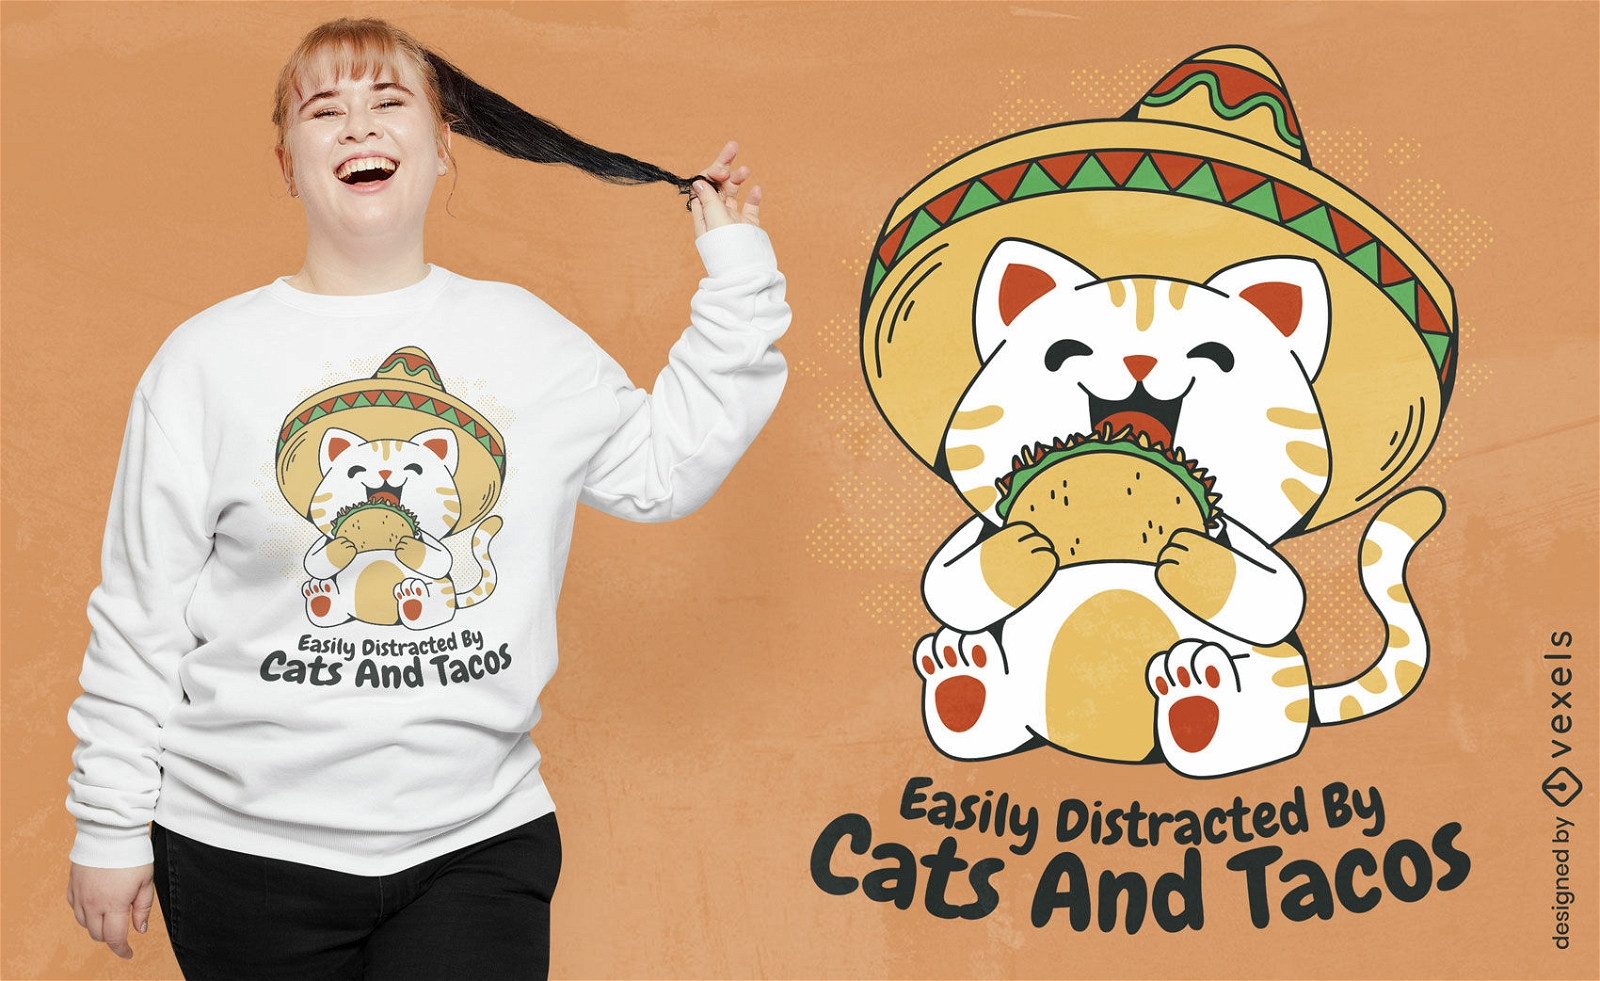 Cute cat and taco cartoon t-shirt design